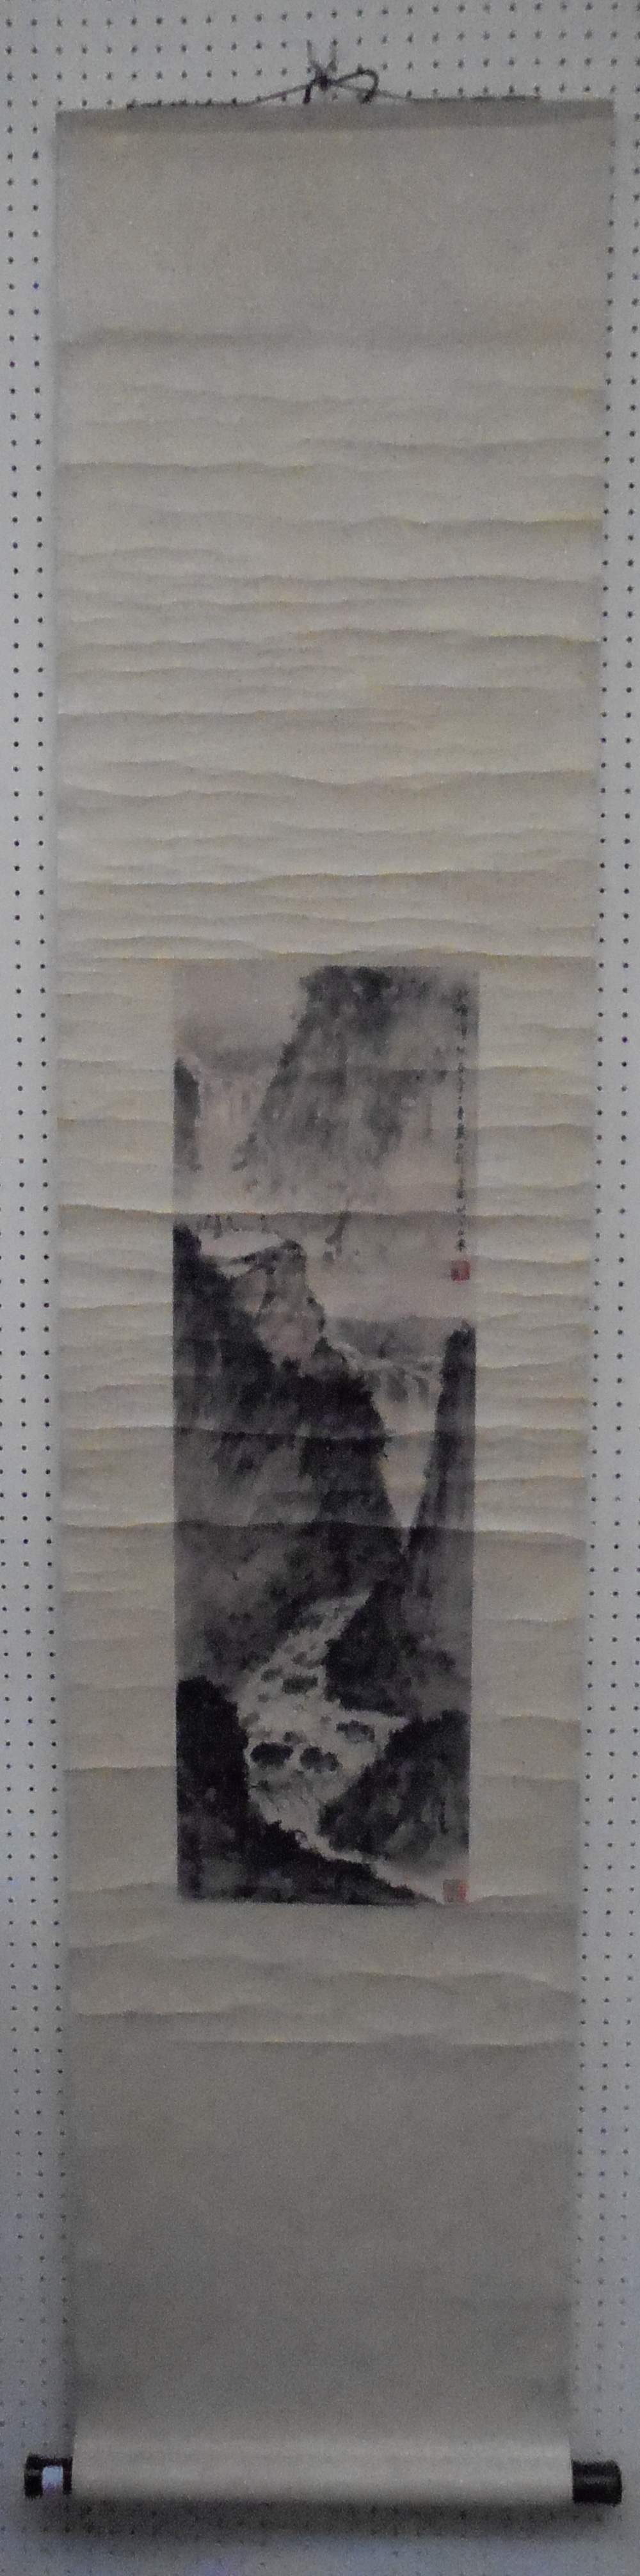 FU BAOSHI (1904-1965) Figures standing beside a waterfall in a mountainous landscape in a scroll ,